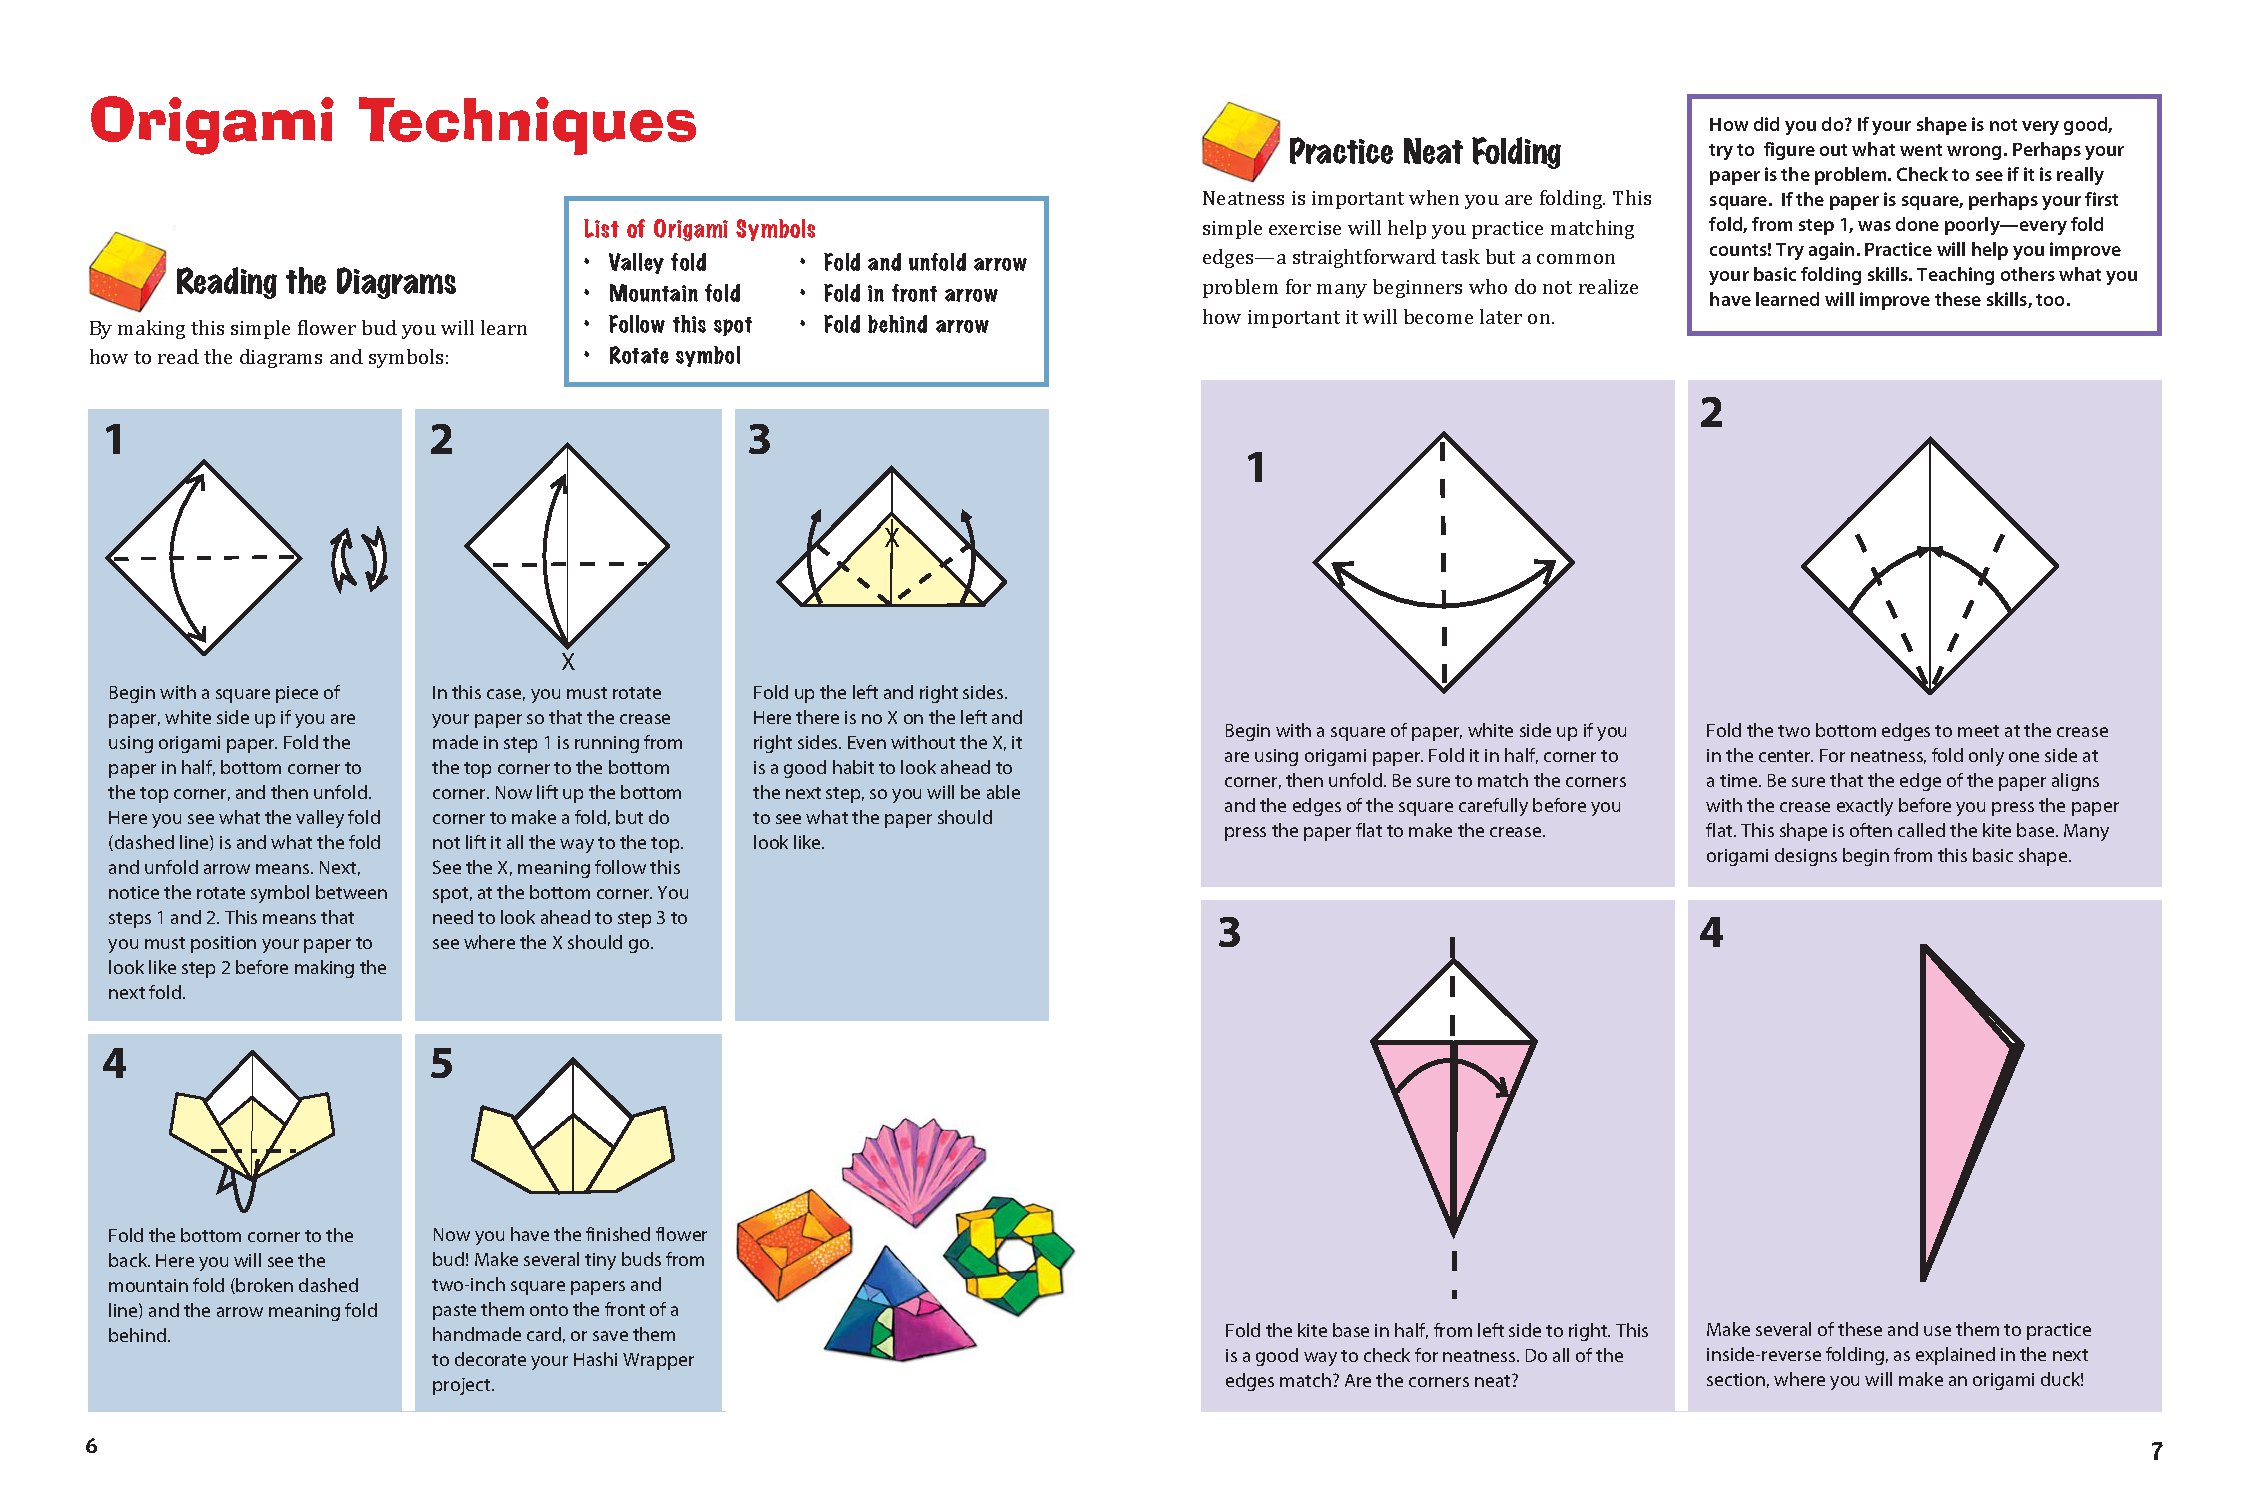 Origami Activities for Kids